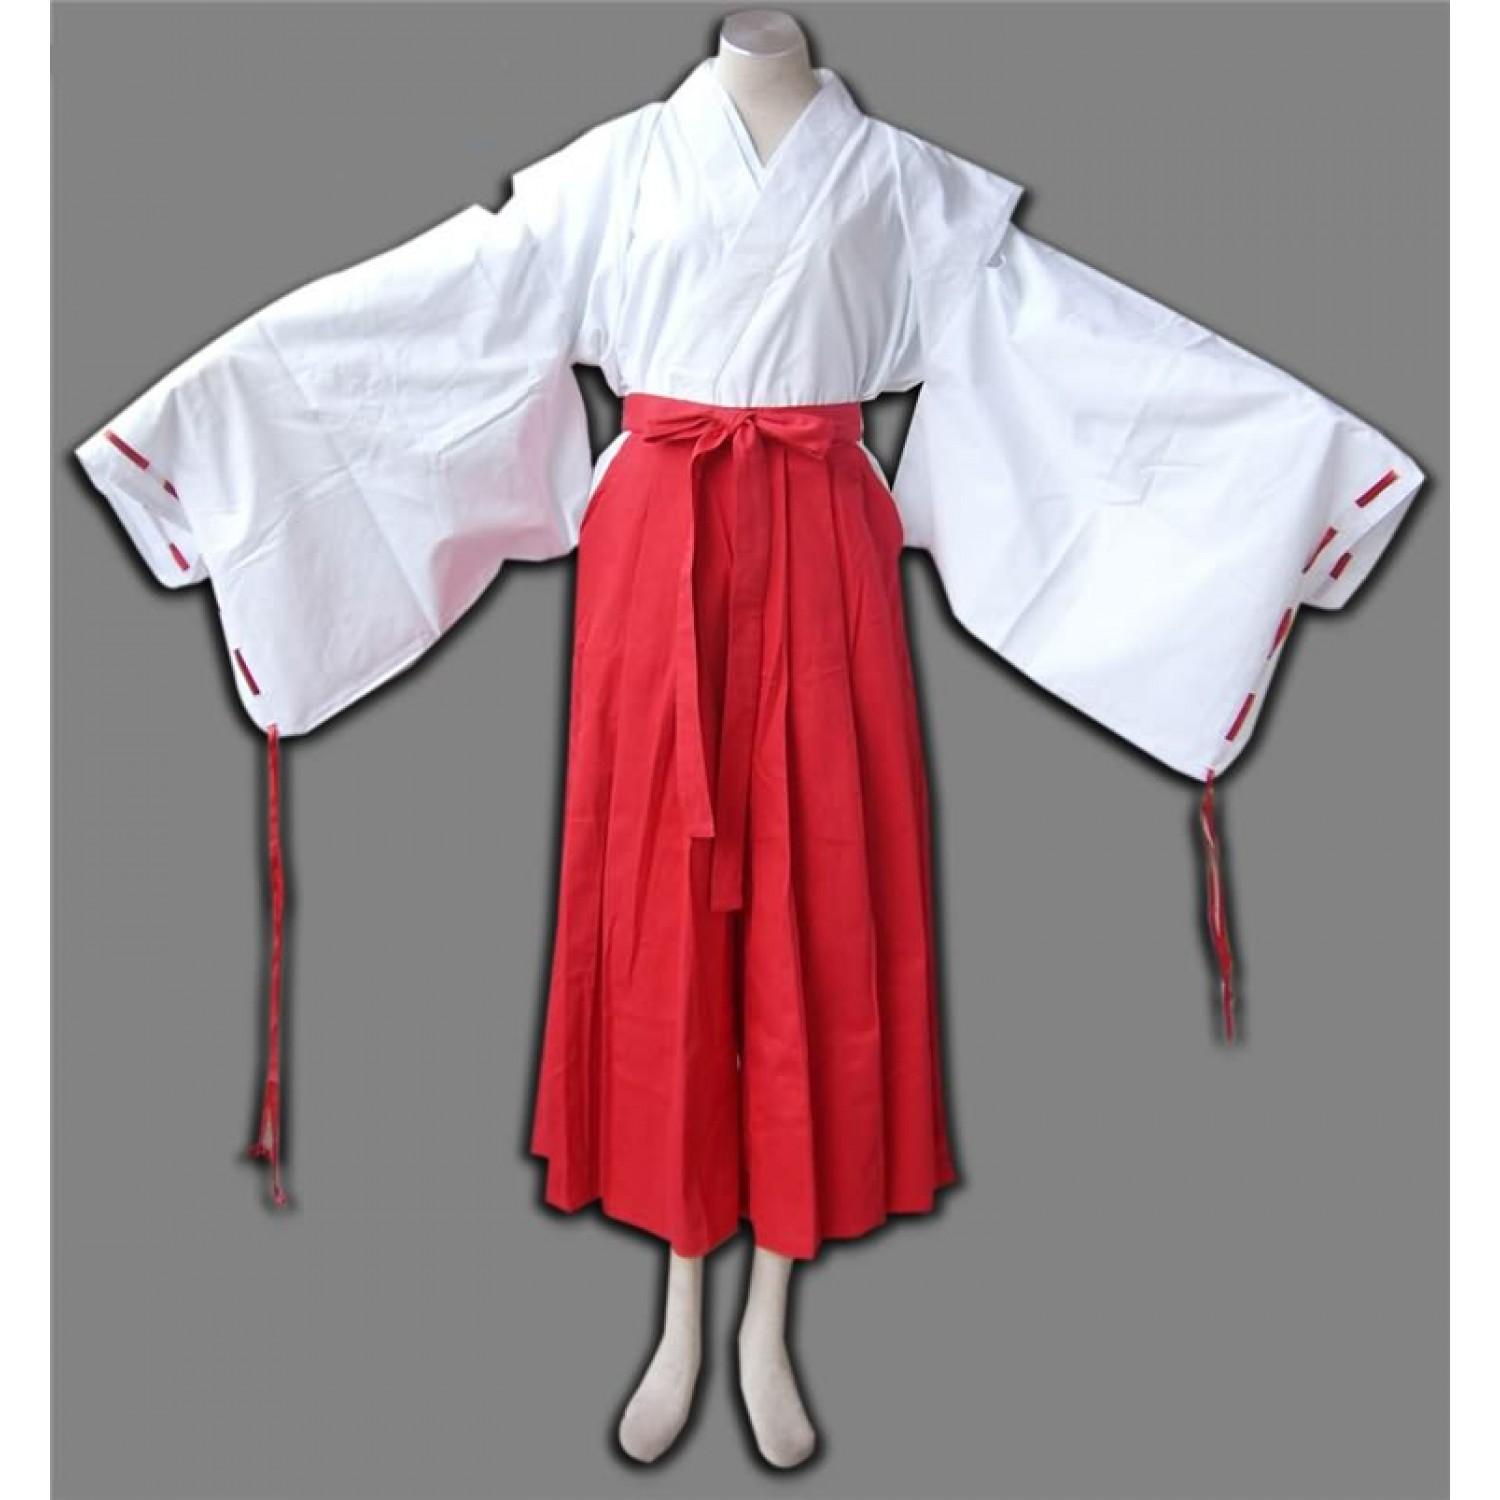 Inuyasha Kikyo Cosplay Costume Kendo Suit ( free shipping ) - $44.99